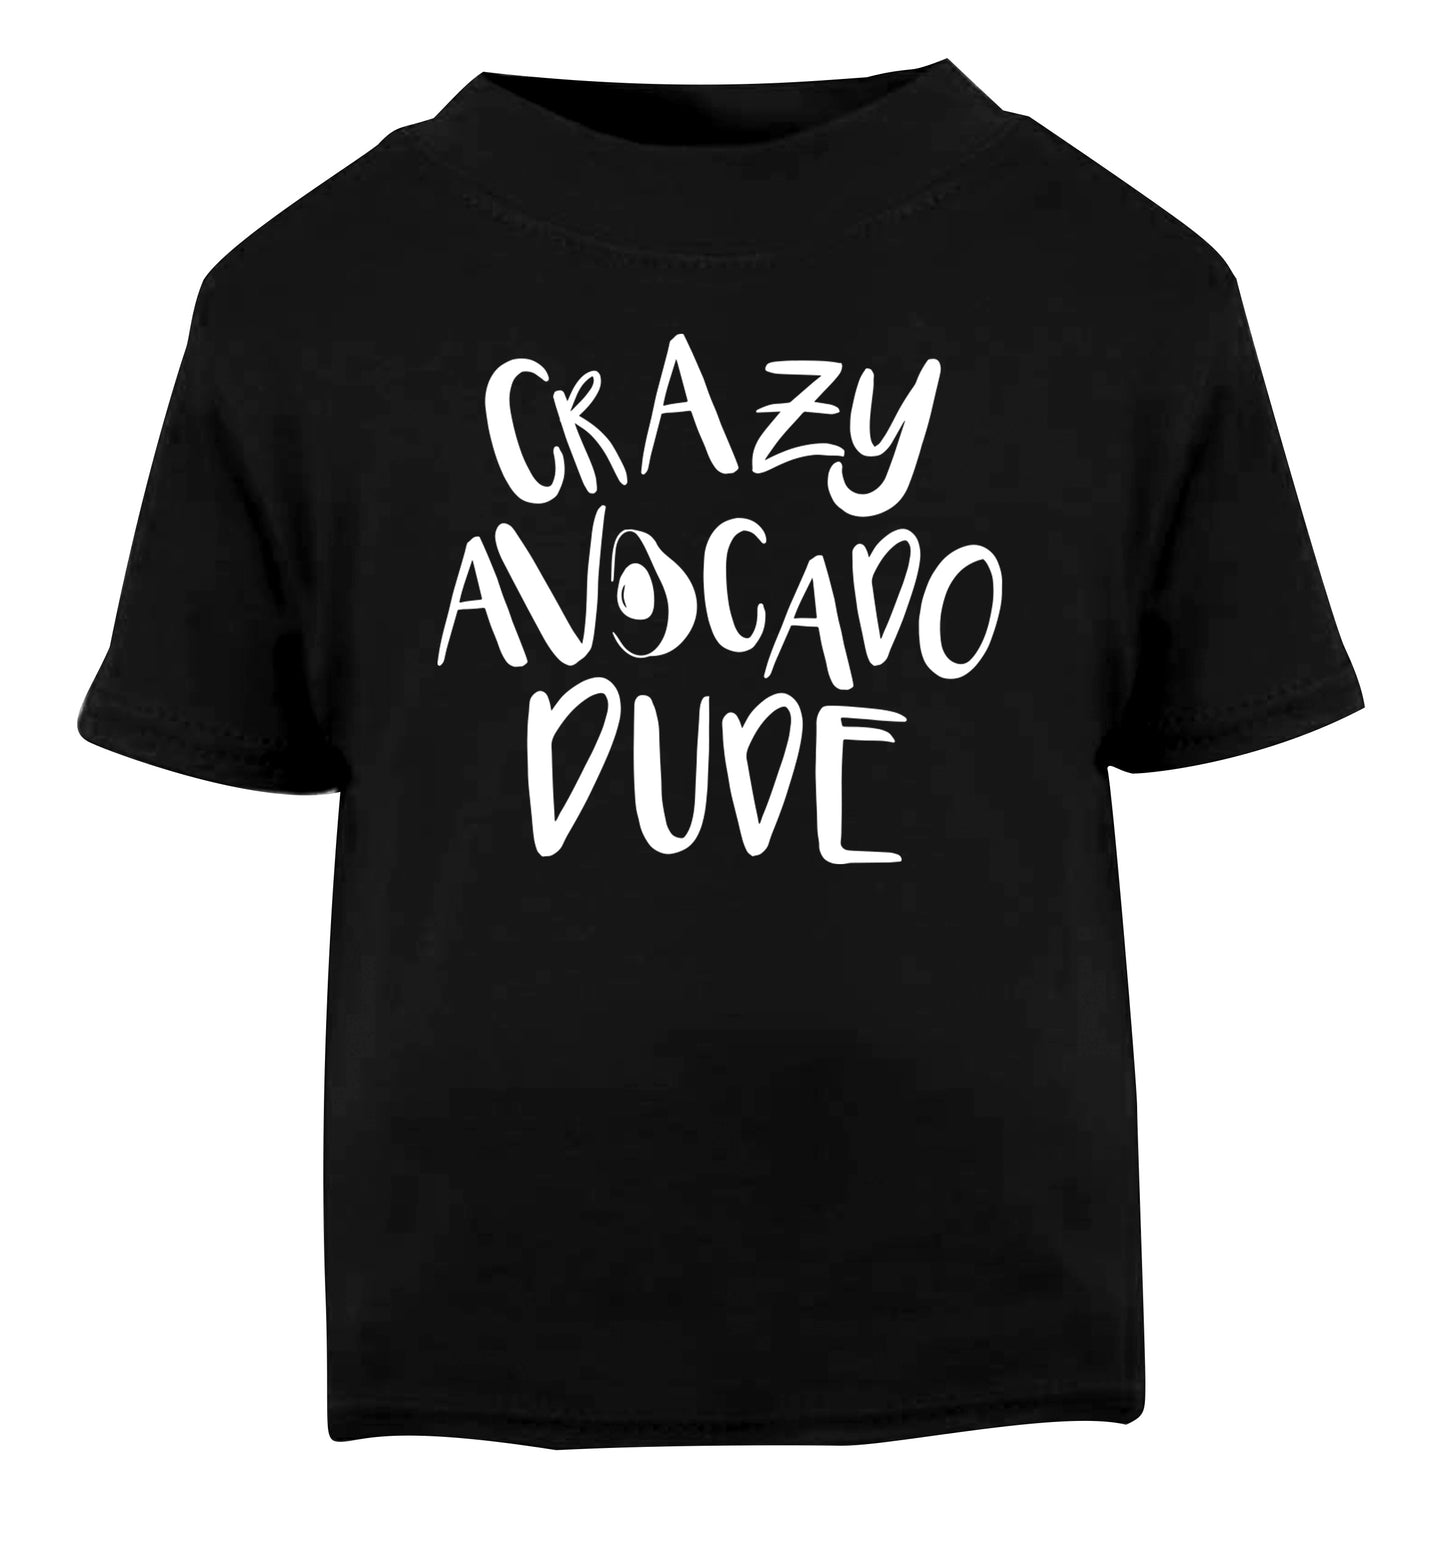 Crazy avocado dude Black Baby Toddler Tshirt 2 years